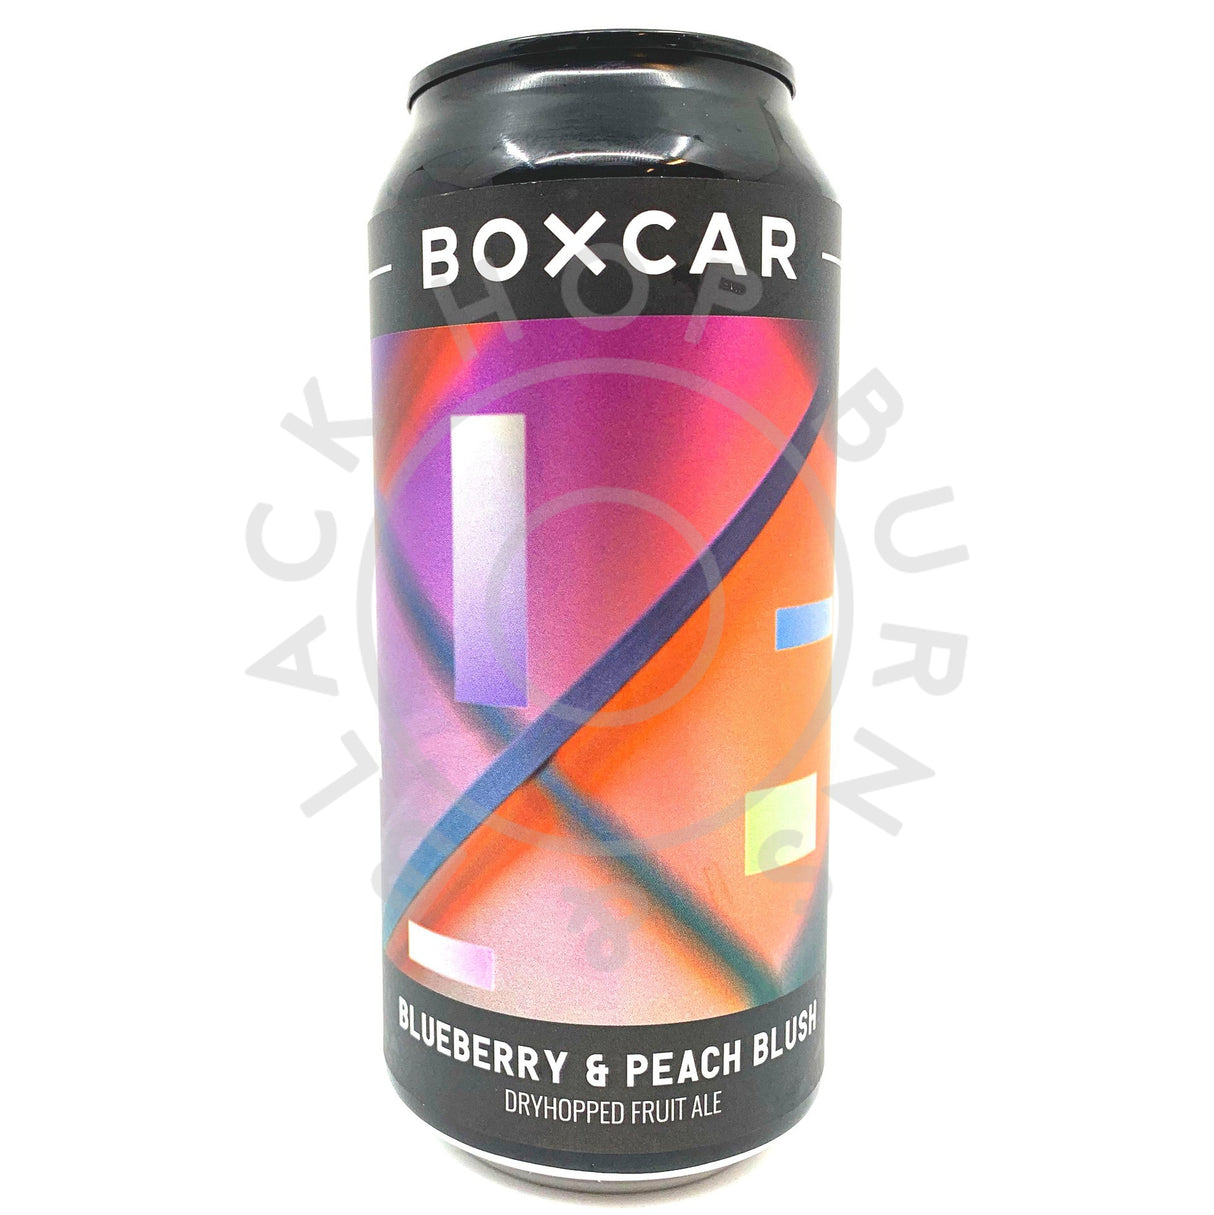 Boxcar Blueberry & Peach Blush Dry-hopped Fruit Ale 5% (440ml can)-Hop Burns & Black